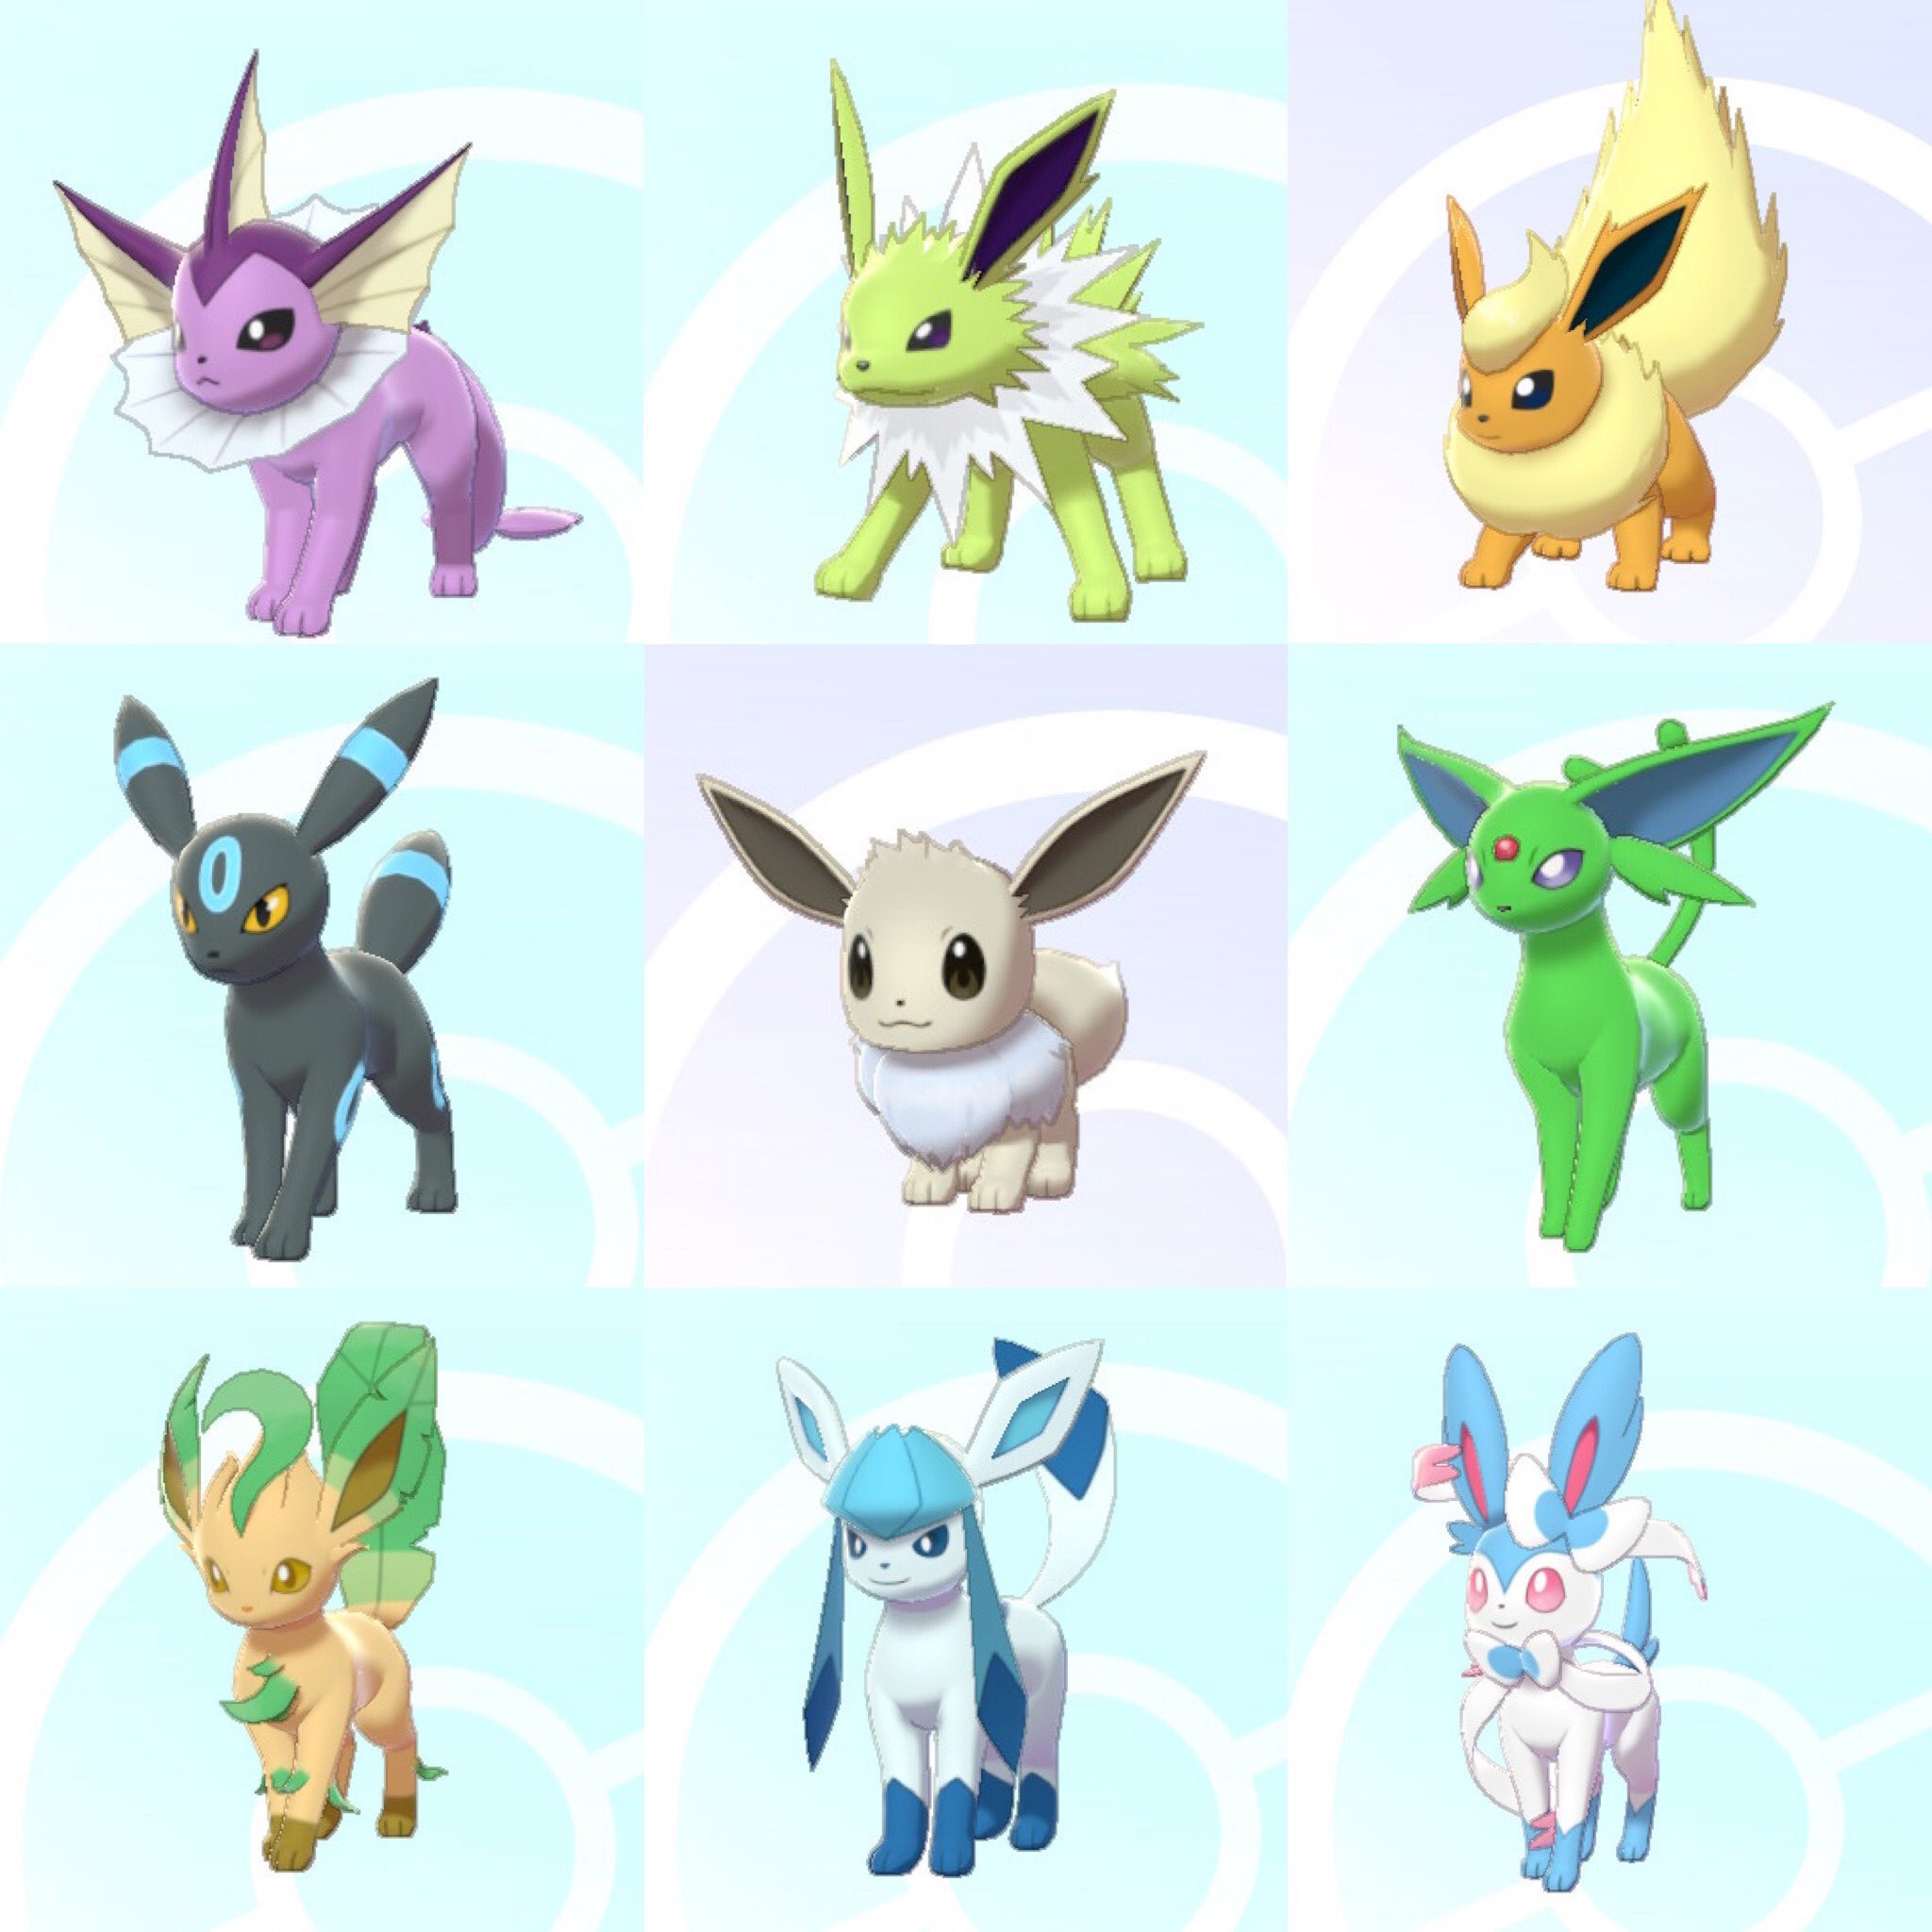 All the Shiny Eeveelutions! - Pokémemes - Pokémon, Pokémon GO